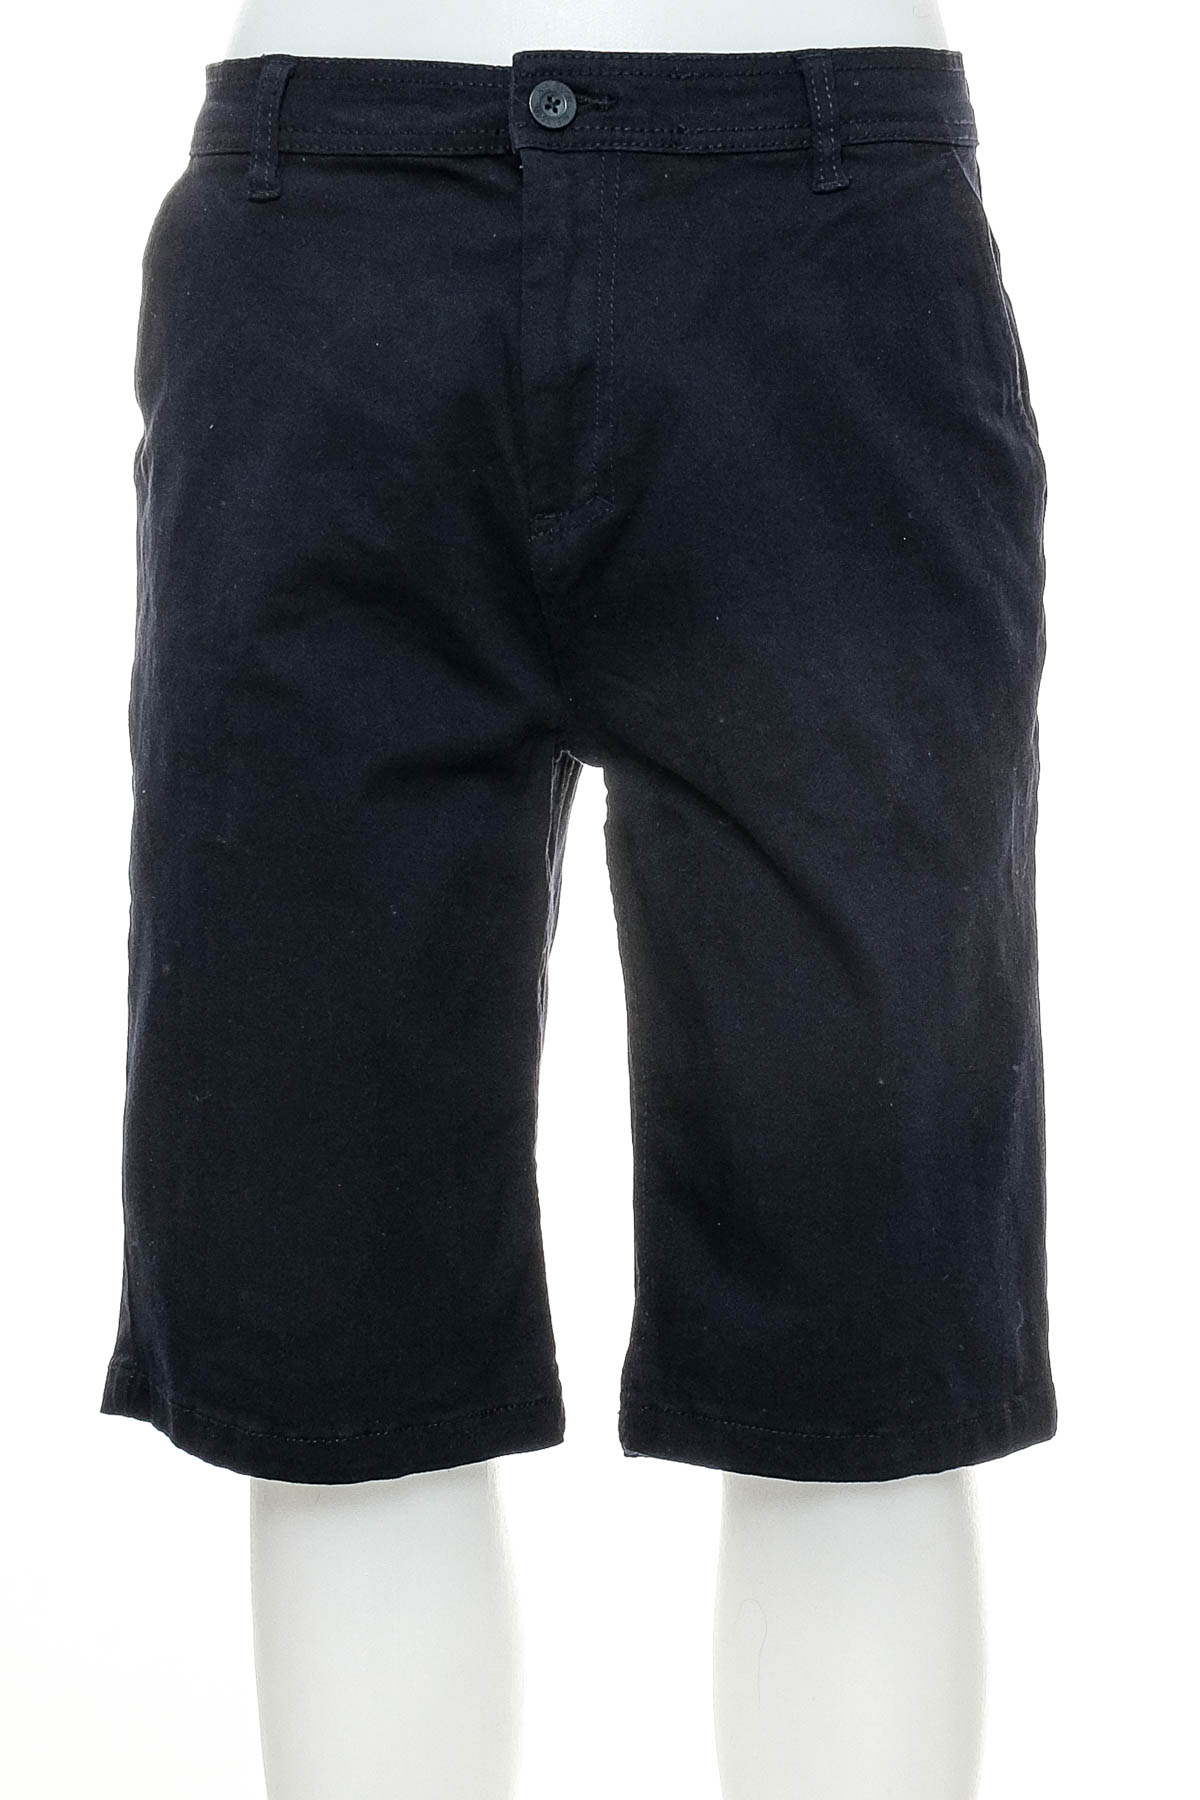 Pantaloni scurți bărbați - Nielsson - 0